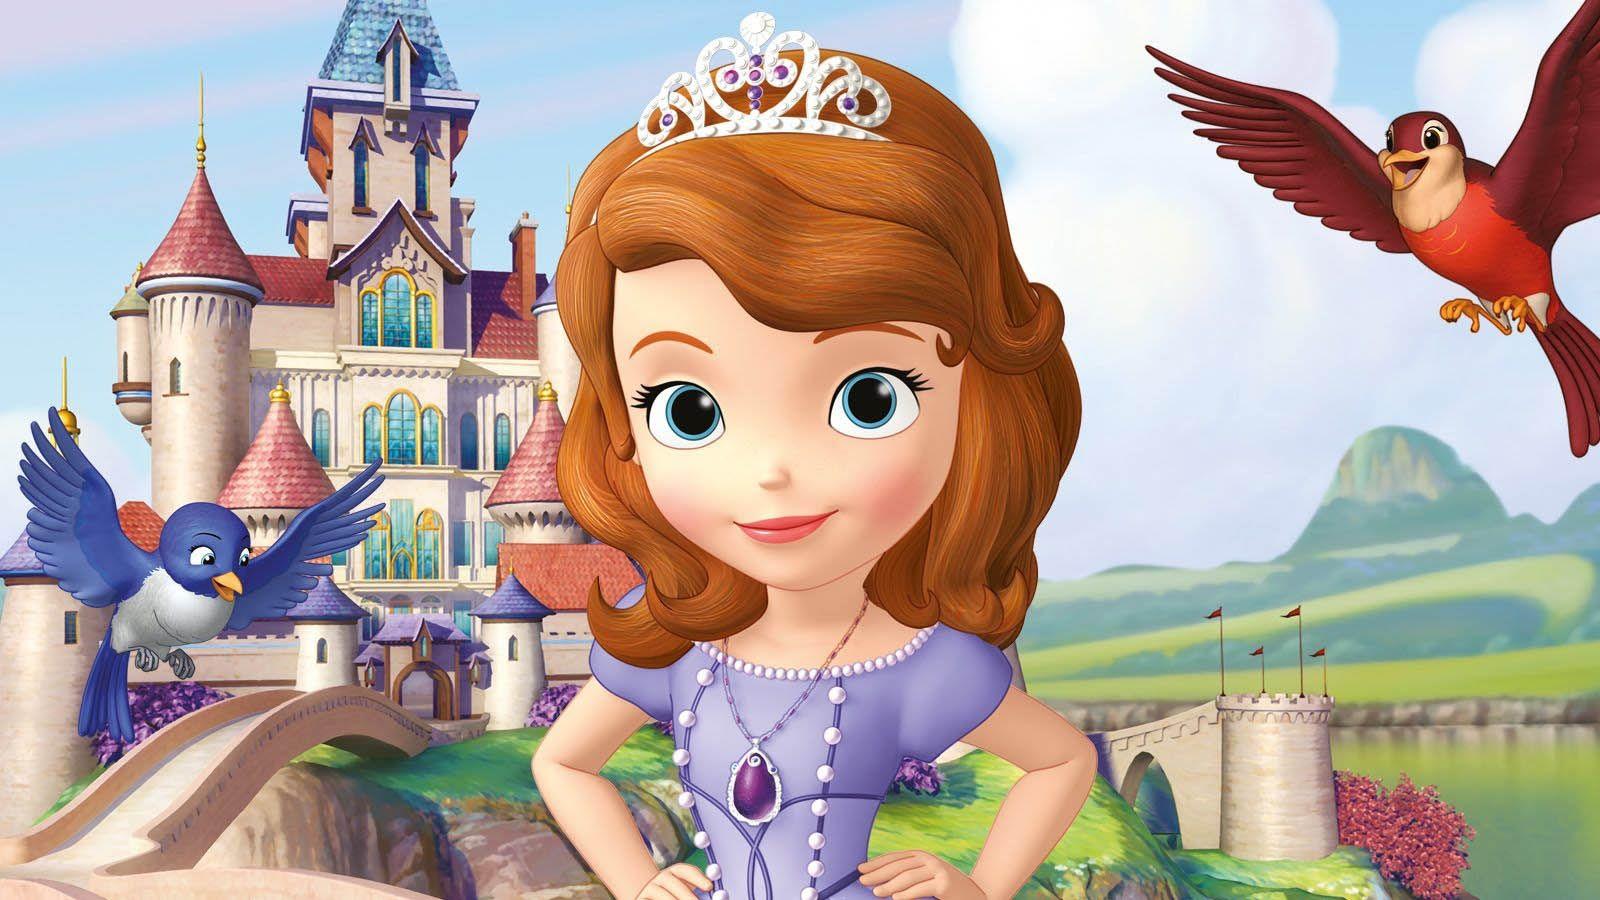 Princess Sofia Wallpapers - Top Free Princess Sofia Backgrounds